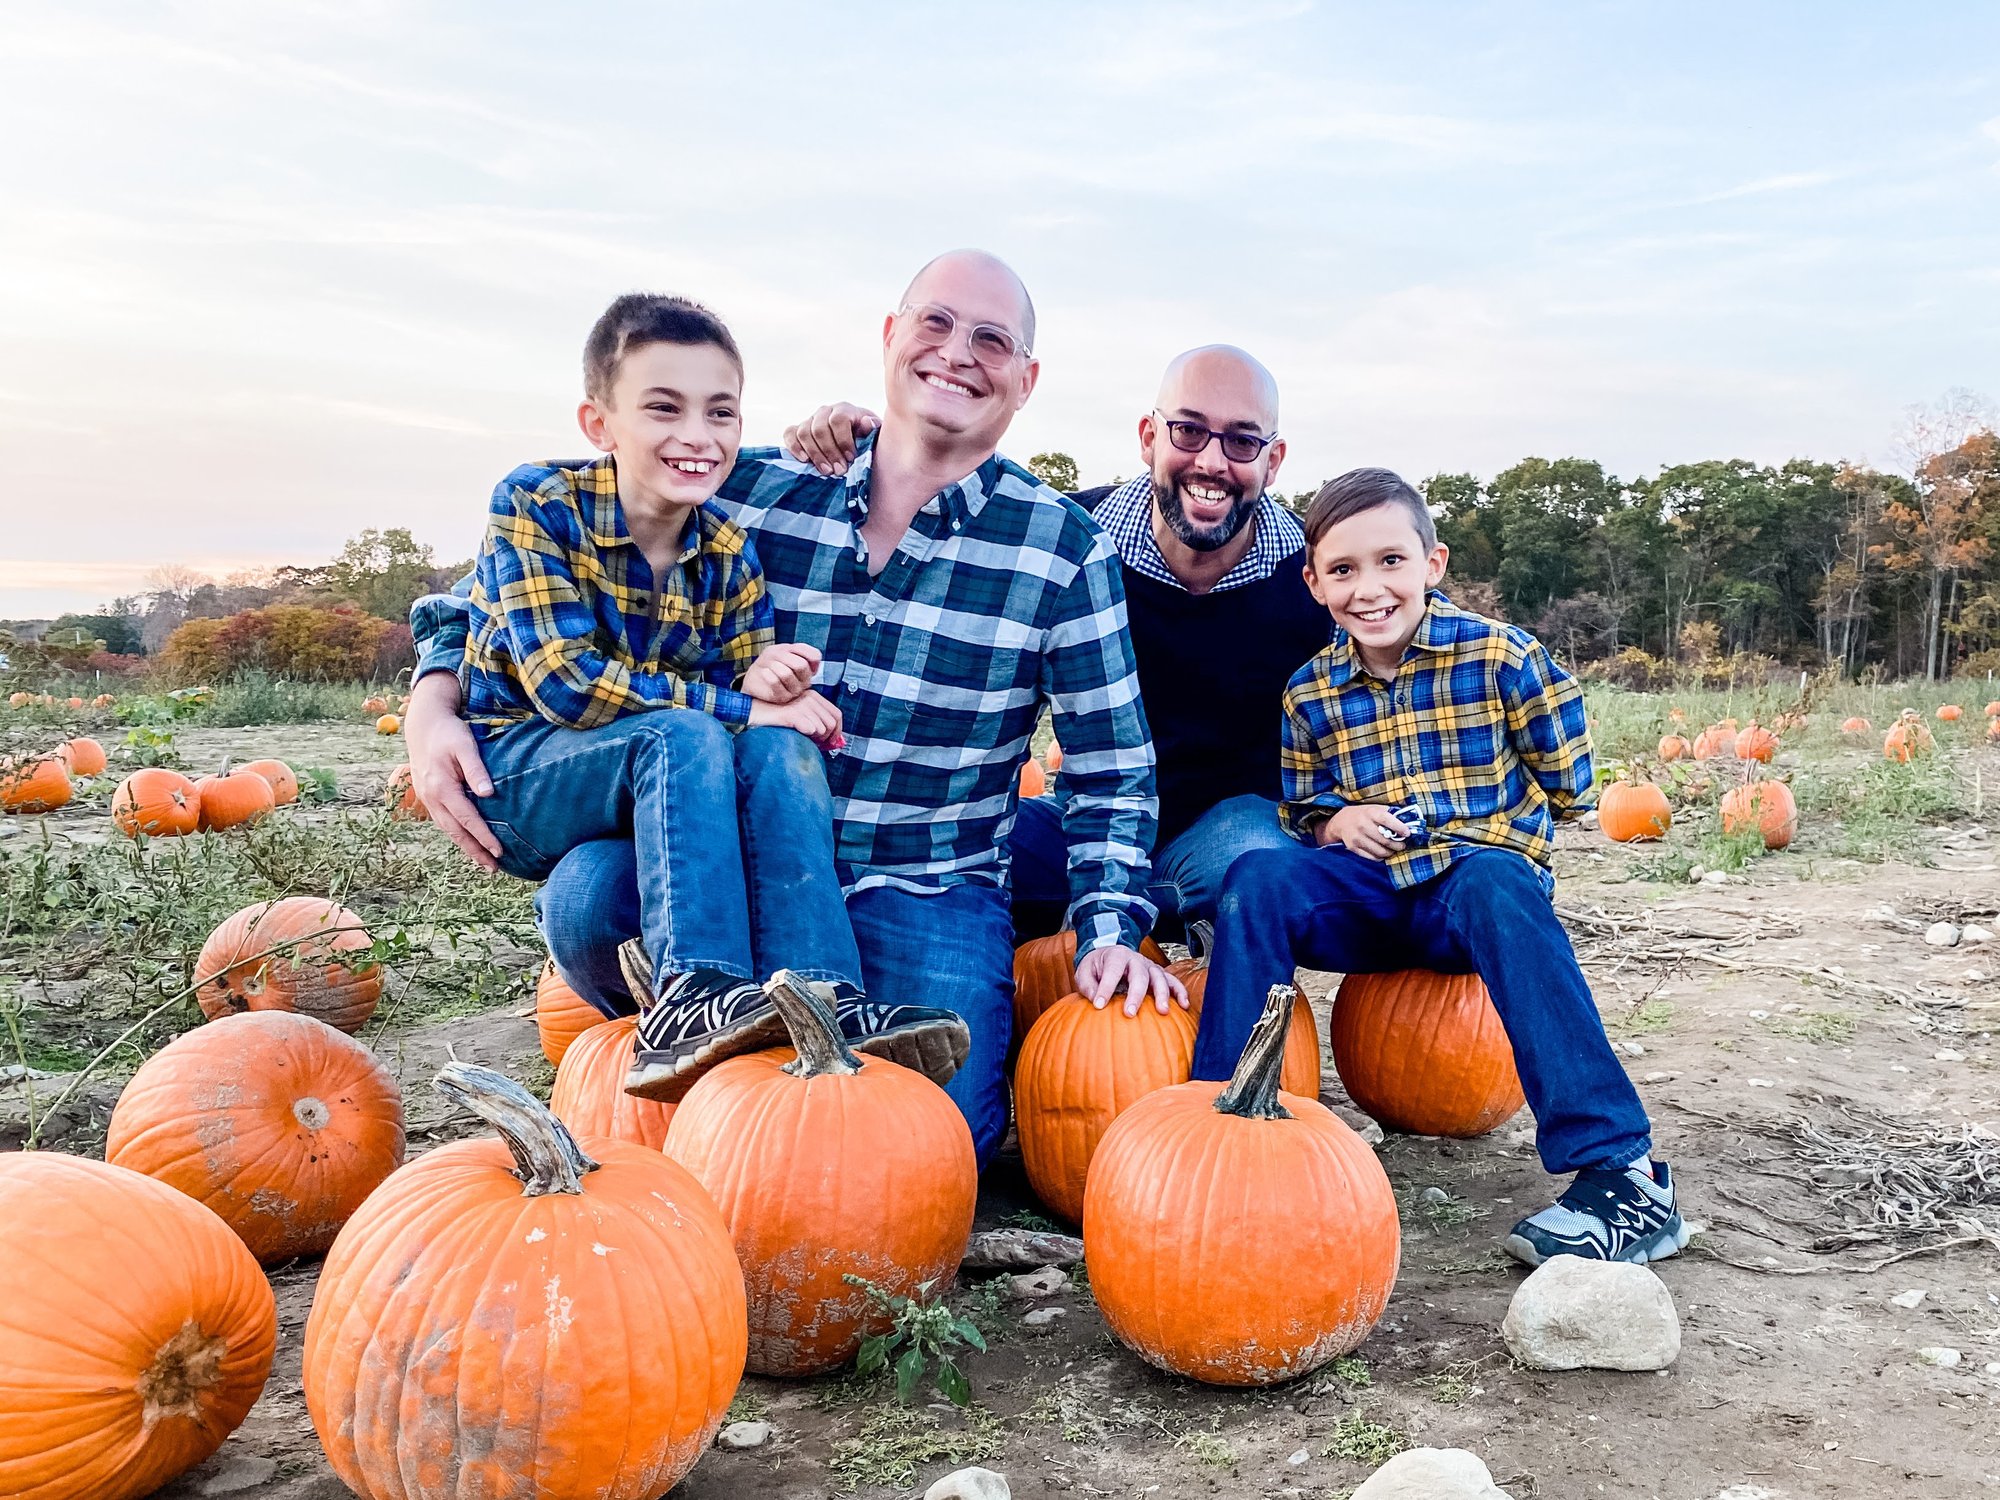 Maldonado Norton Family (sitting on pumpkins) - submission